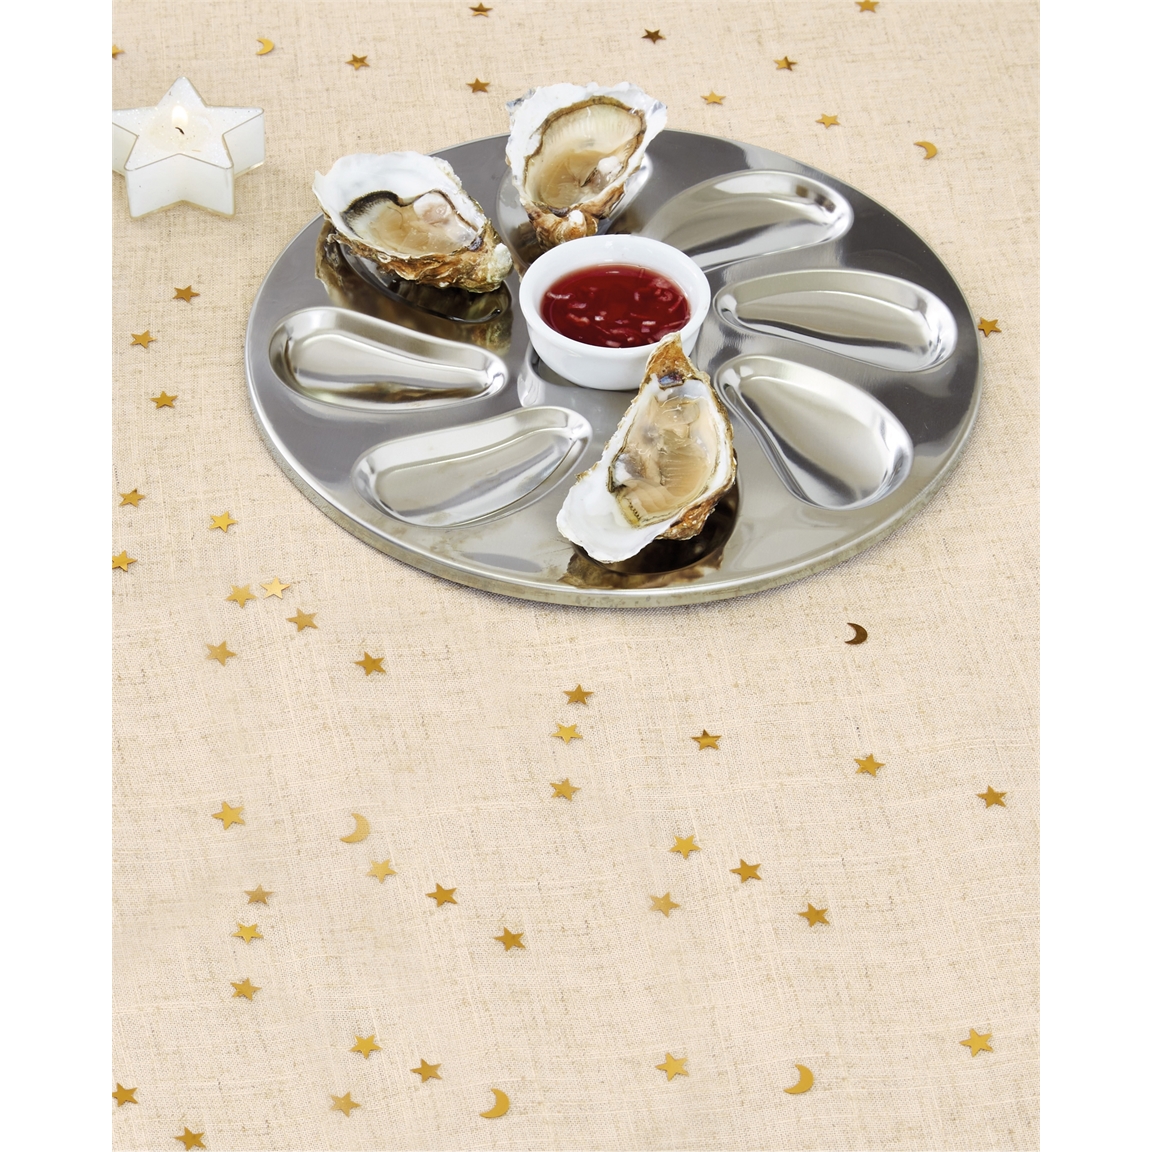 2 ustensiles : Cale-huîtres et/ou Ouvre-huîtres